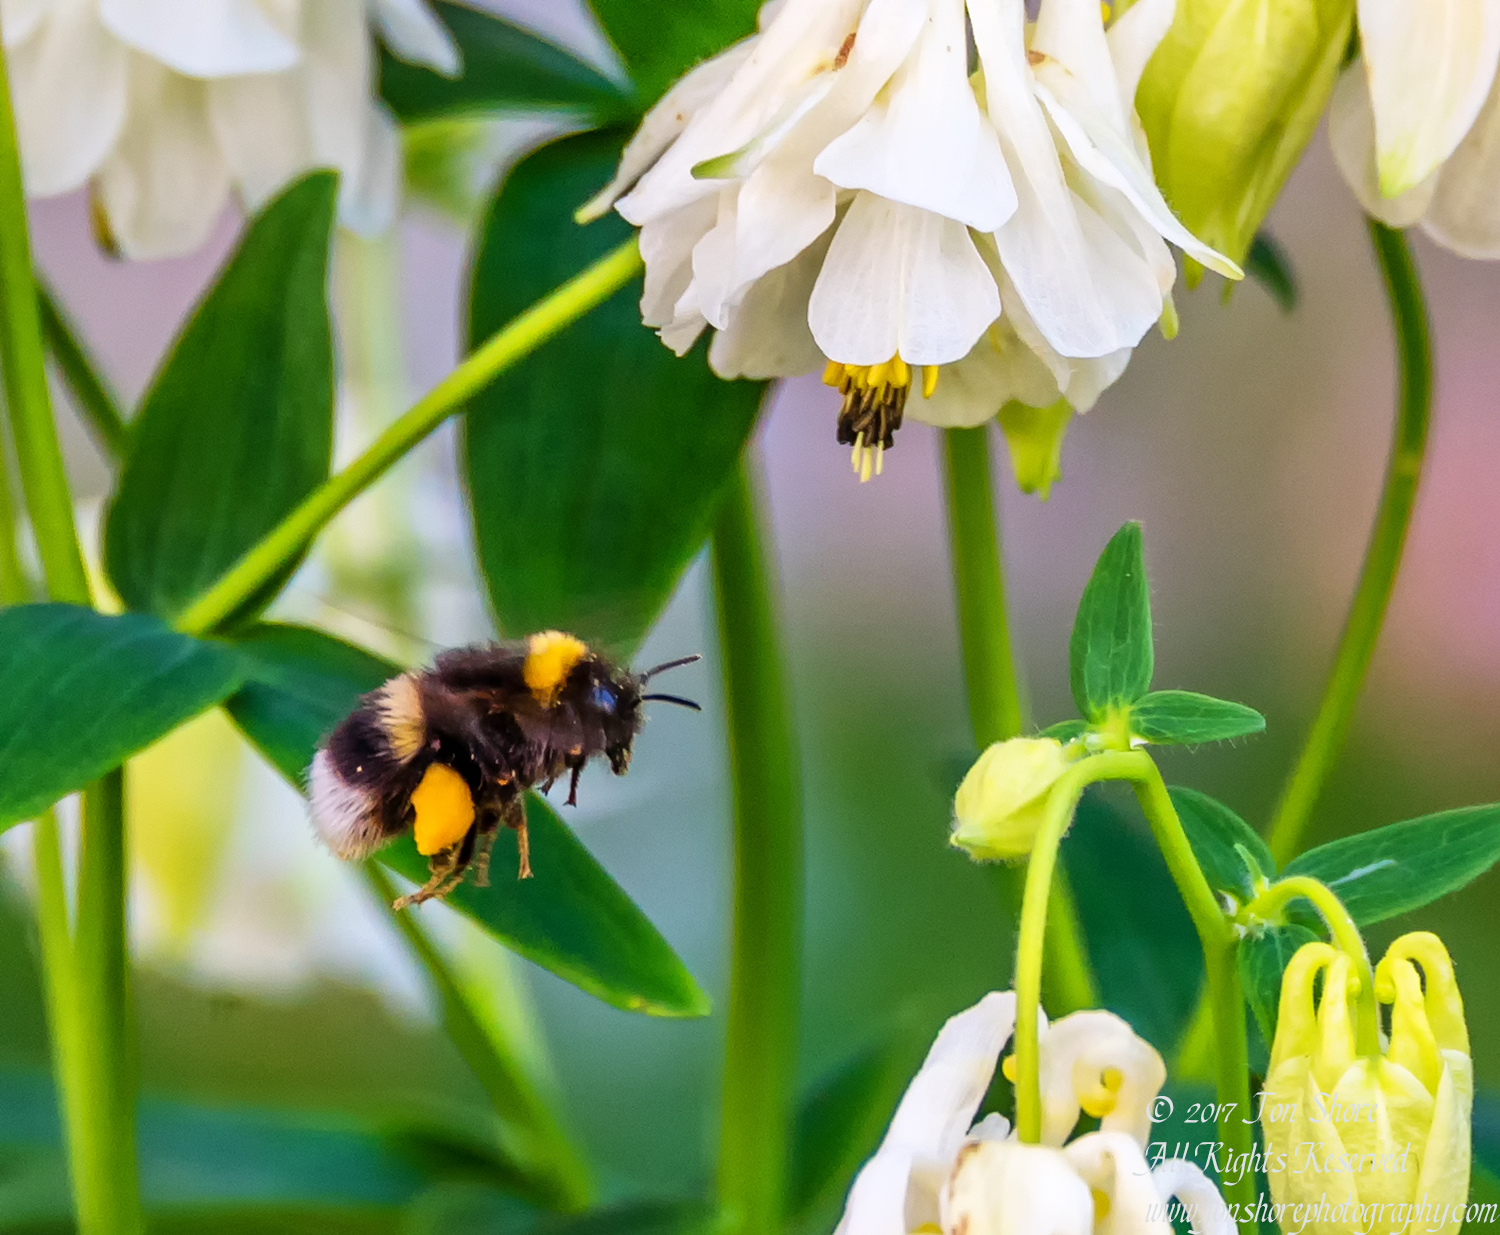 Bee in Flower Zolitude Latvia June 2017 by Jon Shore. Nikkor 300mm